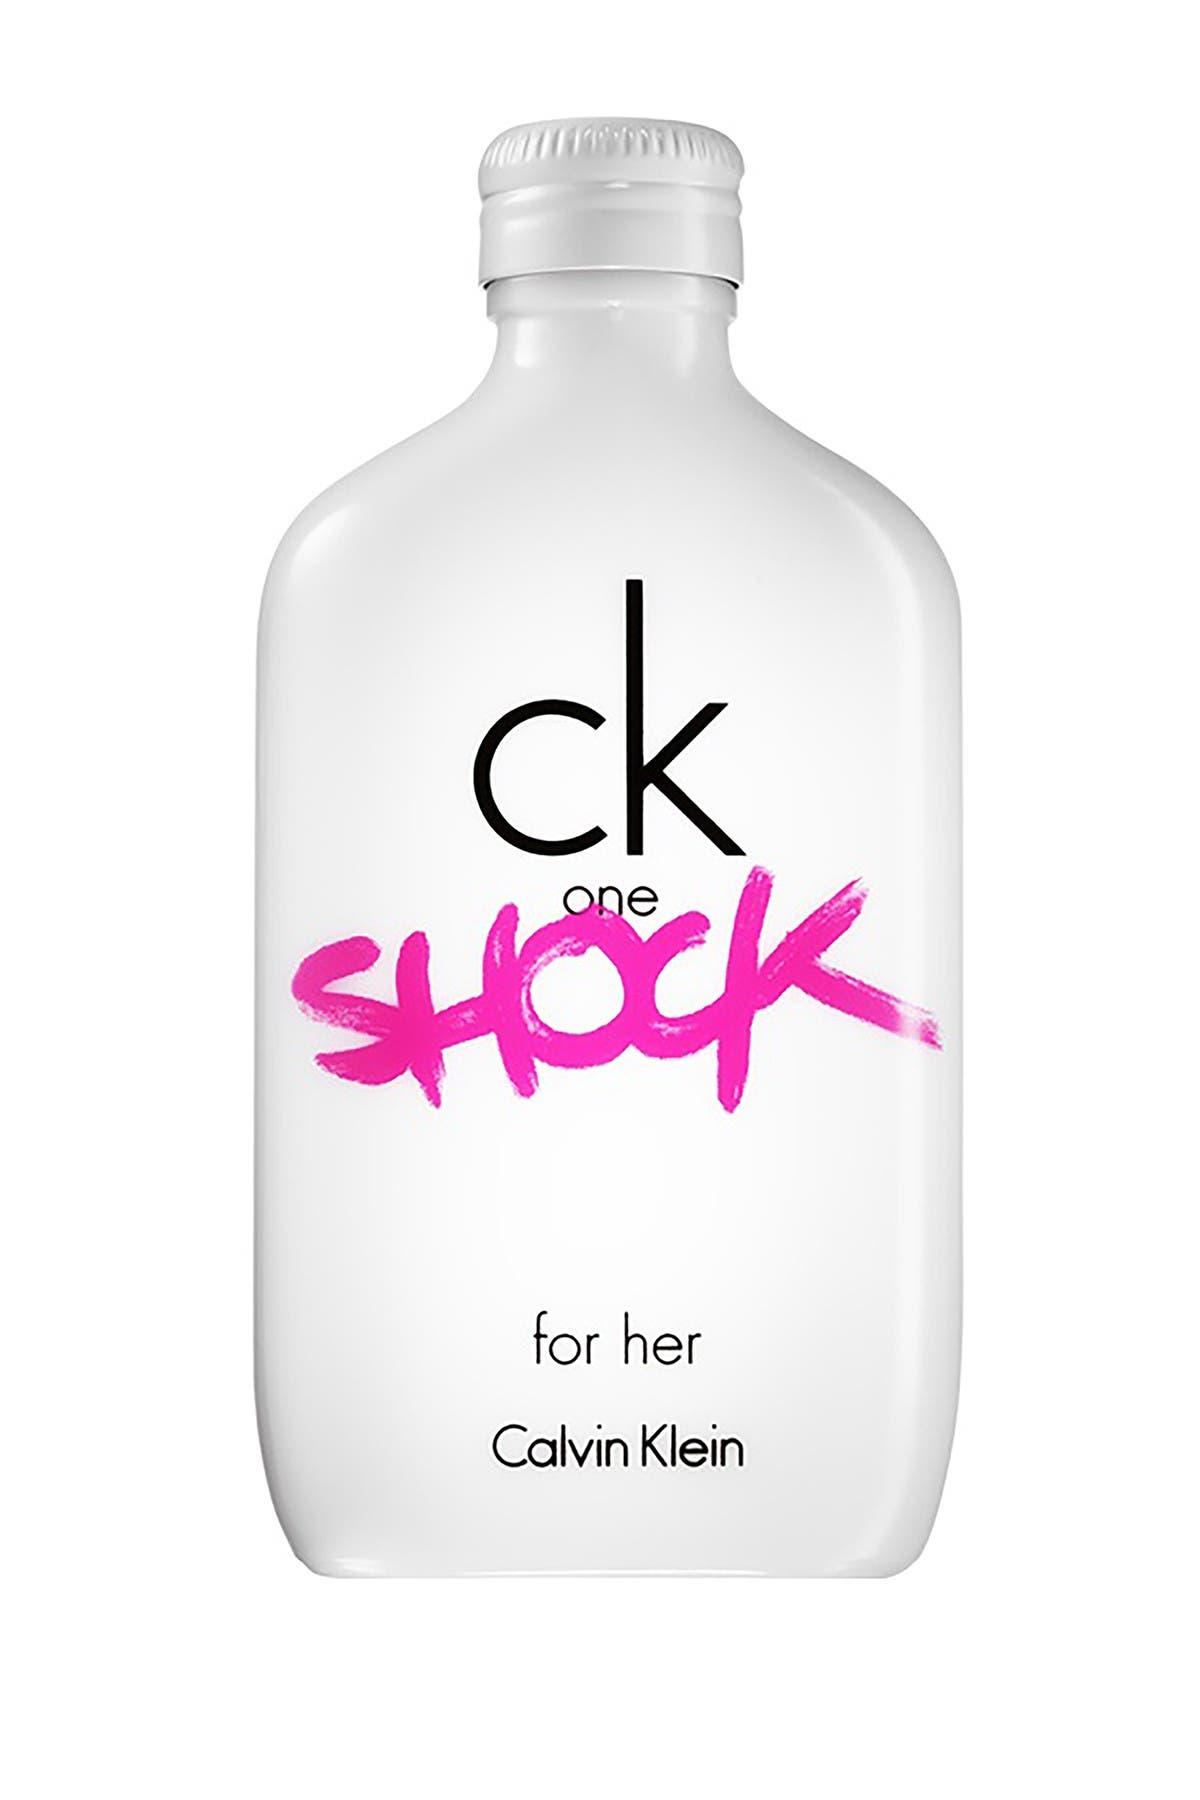 parfum ck shock